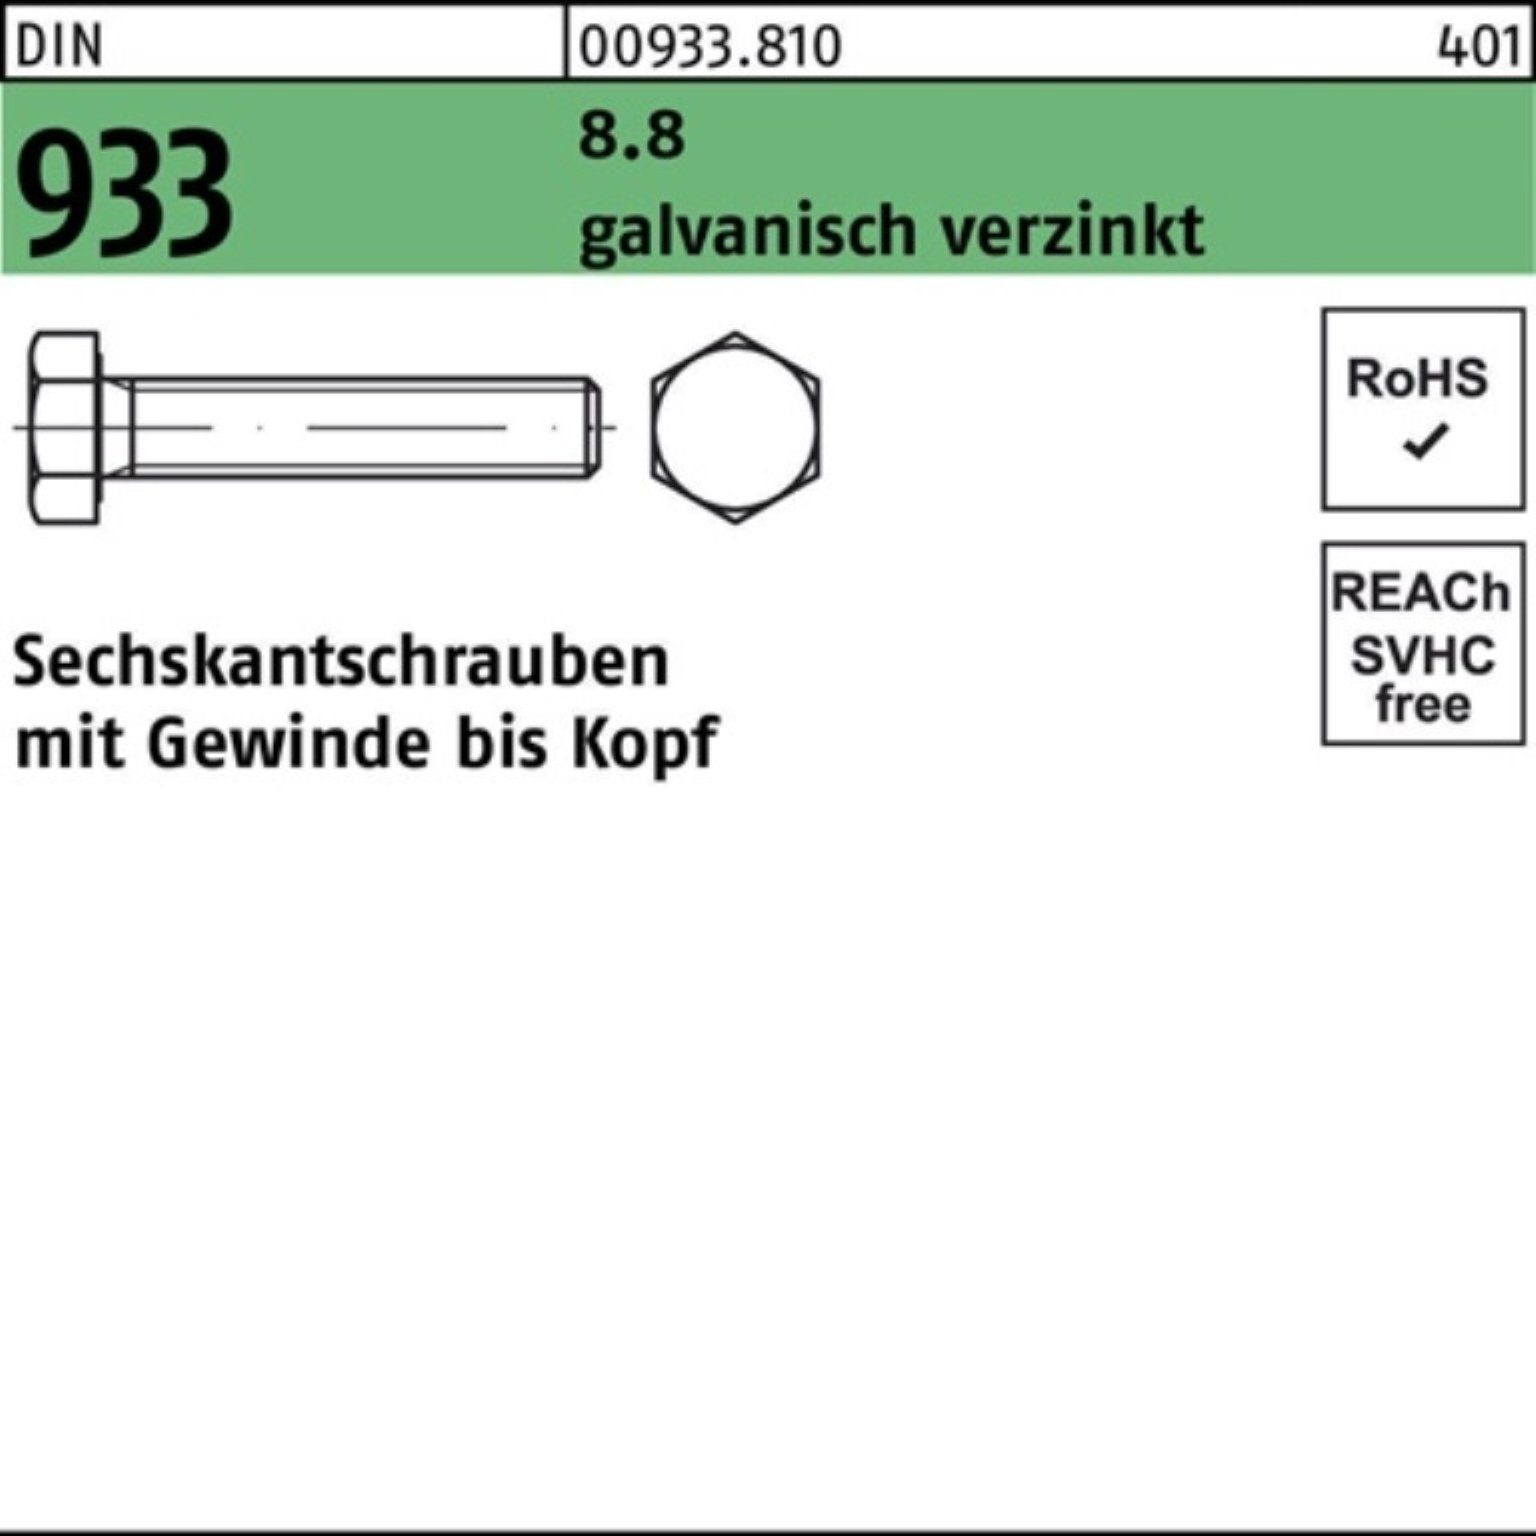 Pack Sechskantschraube Stüc 80 Sechskantschraube 8.8 M36x Reyher 1 galv.verz. DIN 100er 933 VG